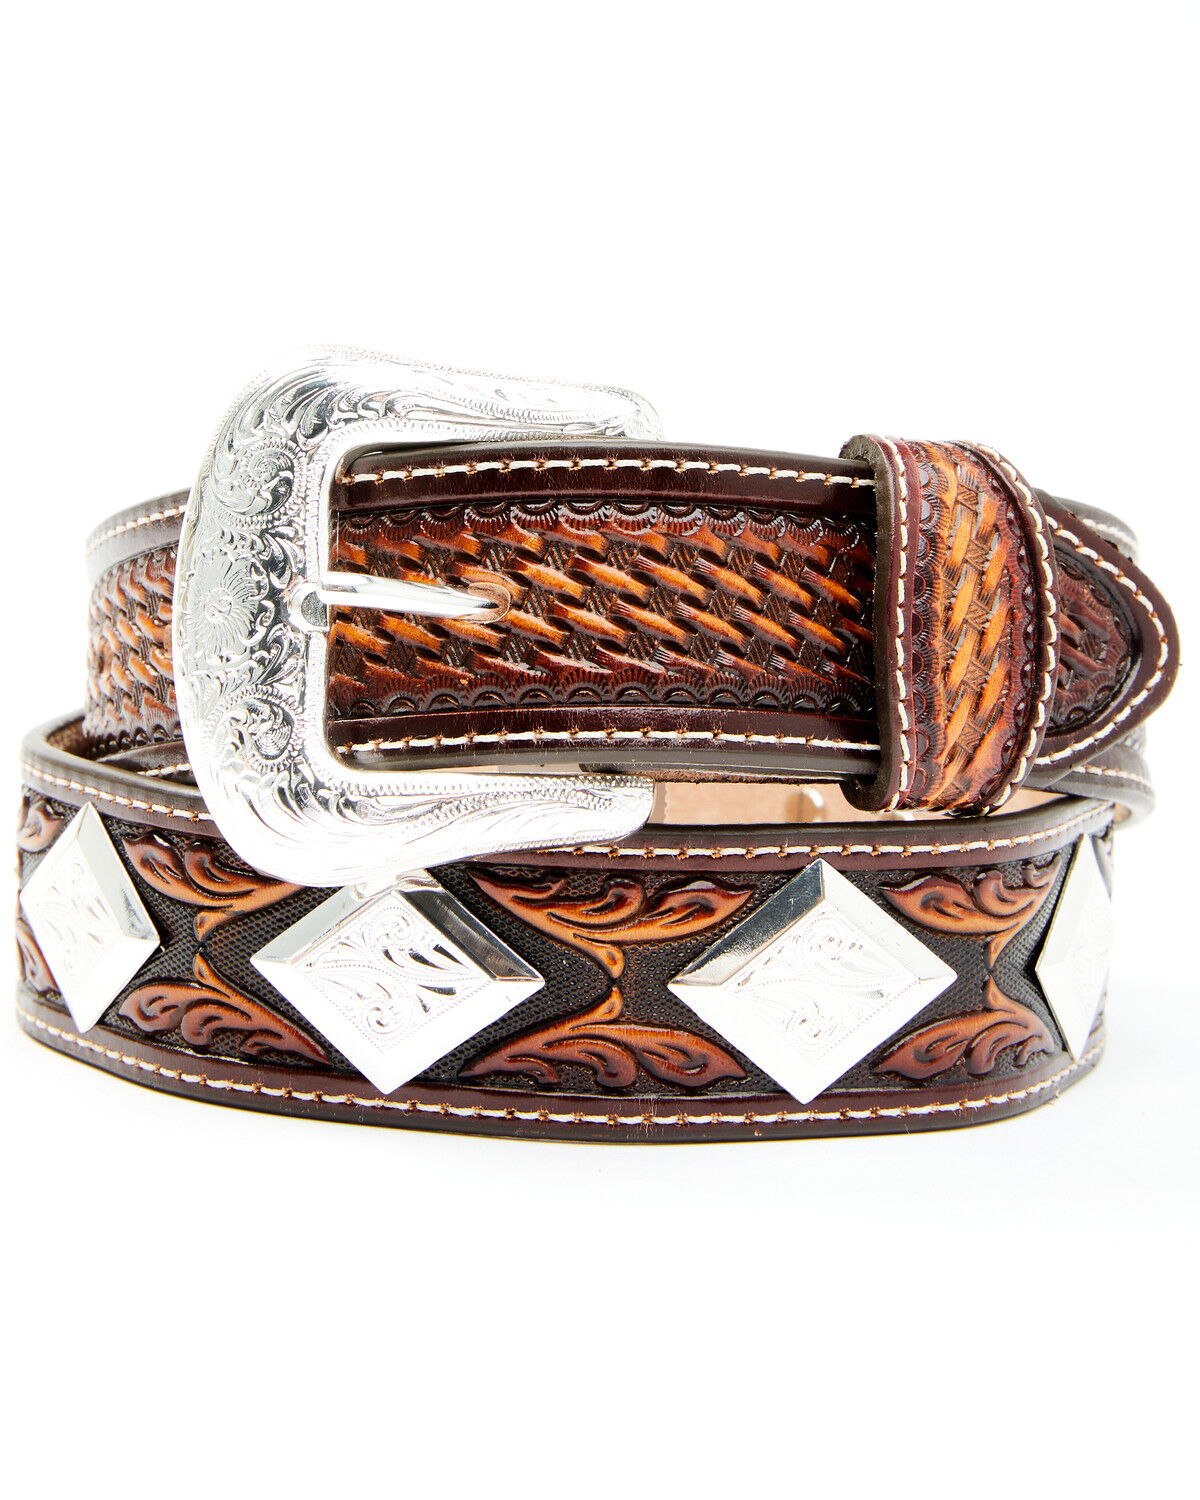 FORT WORTH C41978 NEW Tony Lama leather belt brown snake skin 